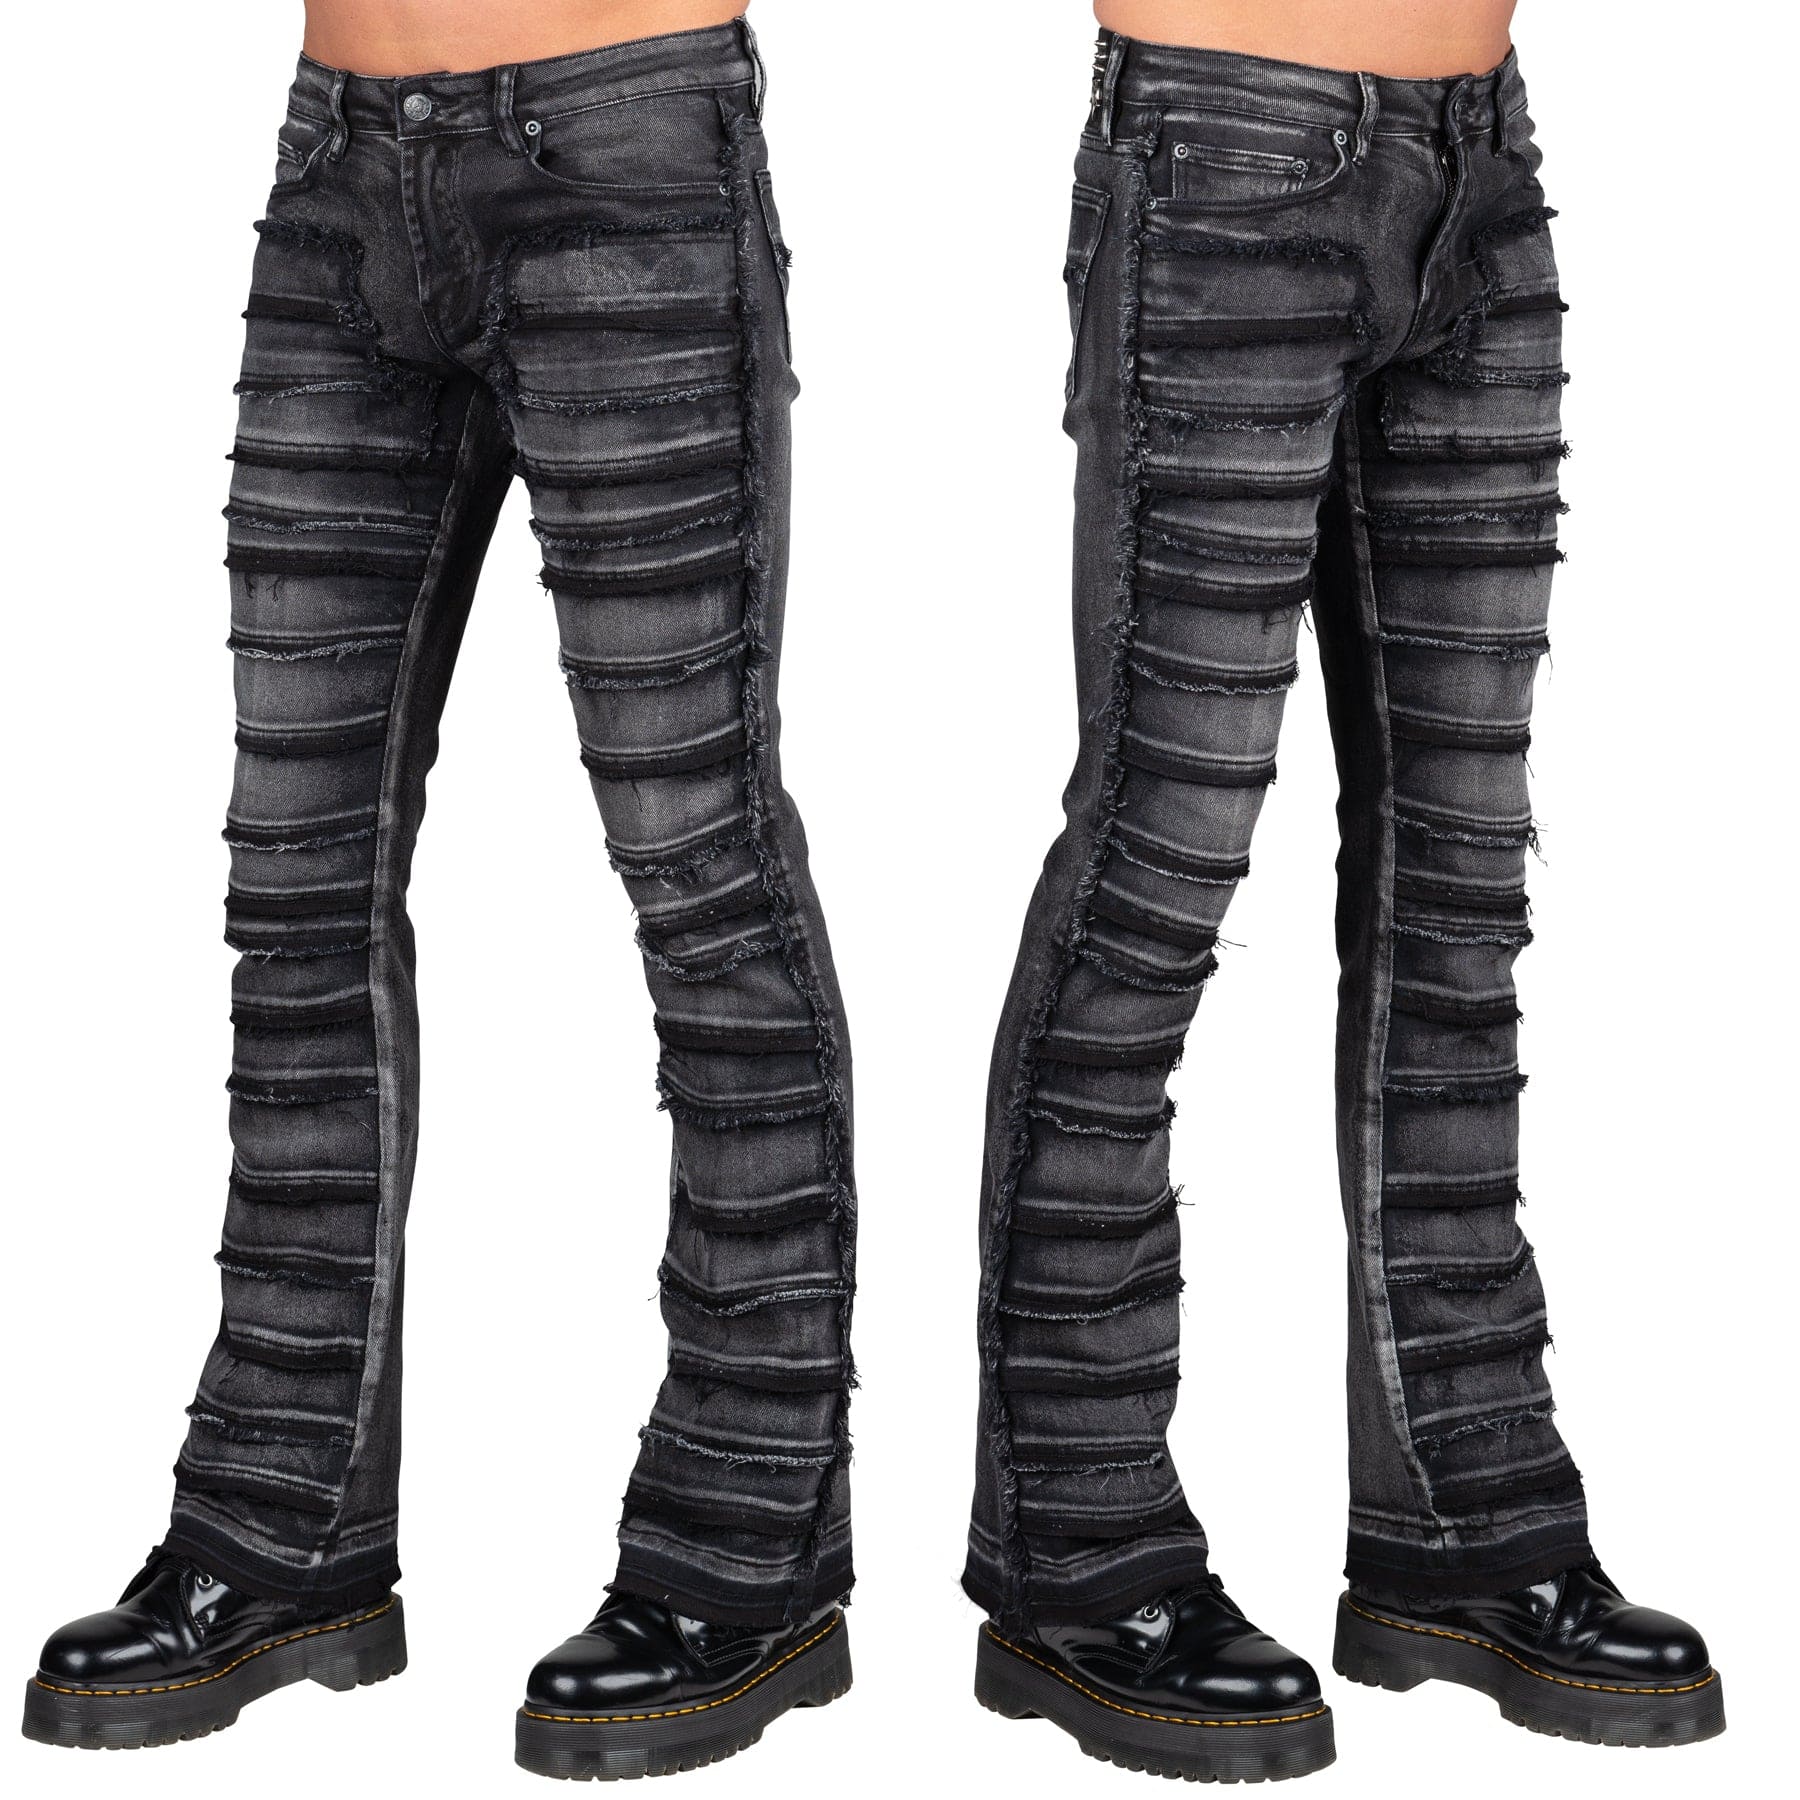 Wornstar Clothing Mens Jeans. Bandage Denim Stage Pants - Vintage Black